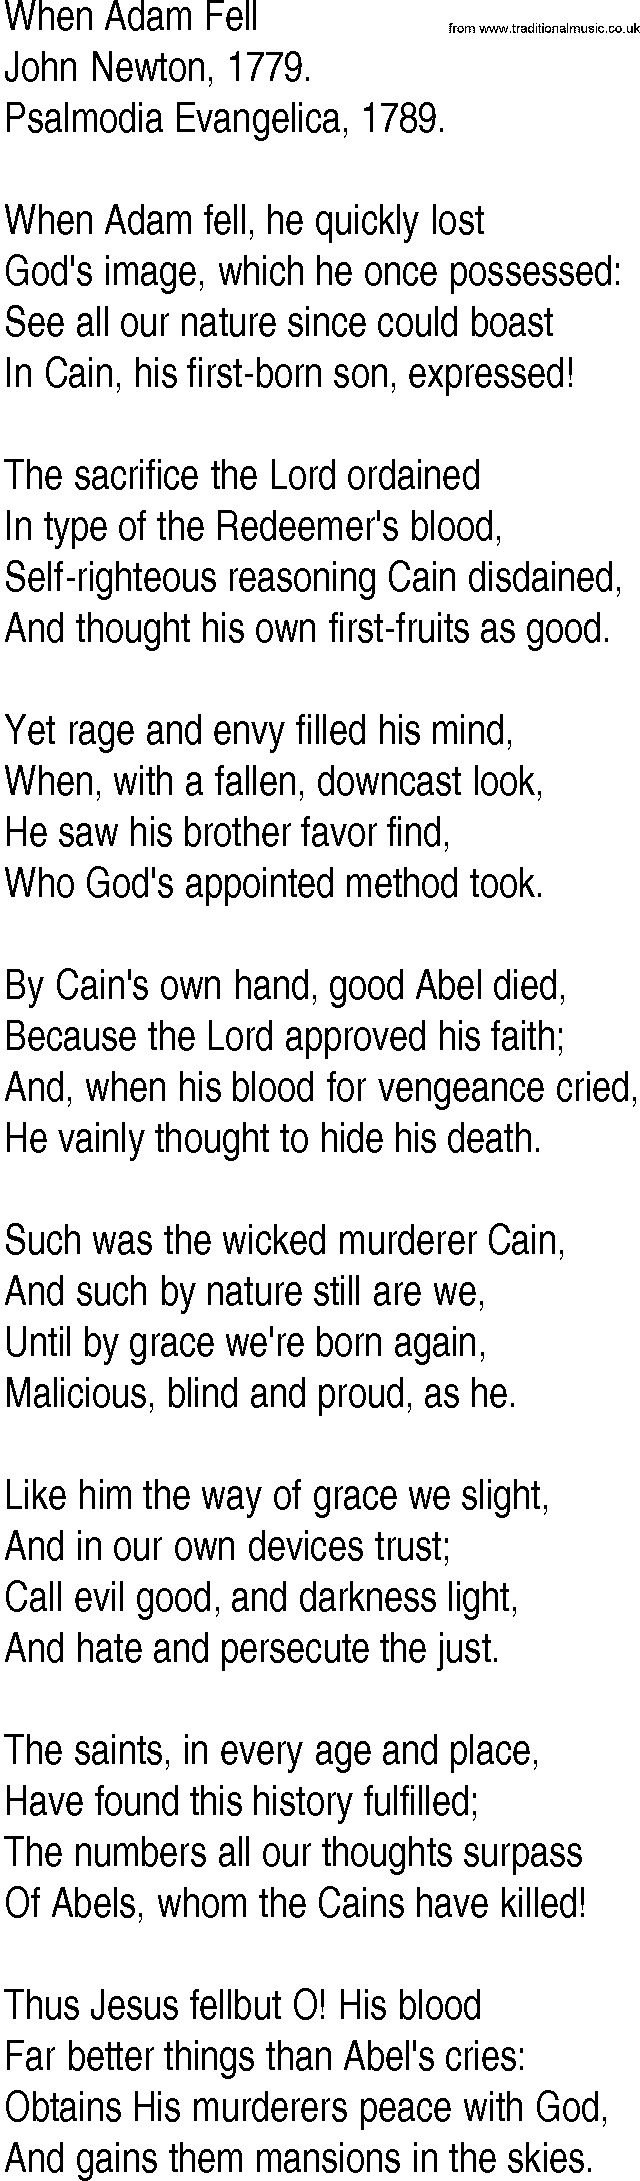 Hymn and Gospel Song: When Adam Fell by John Newton lyrics